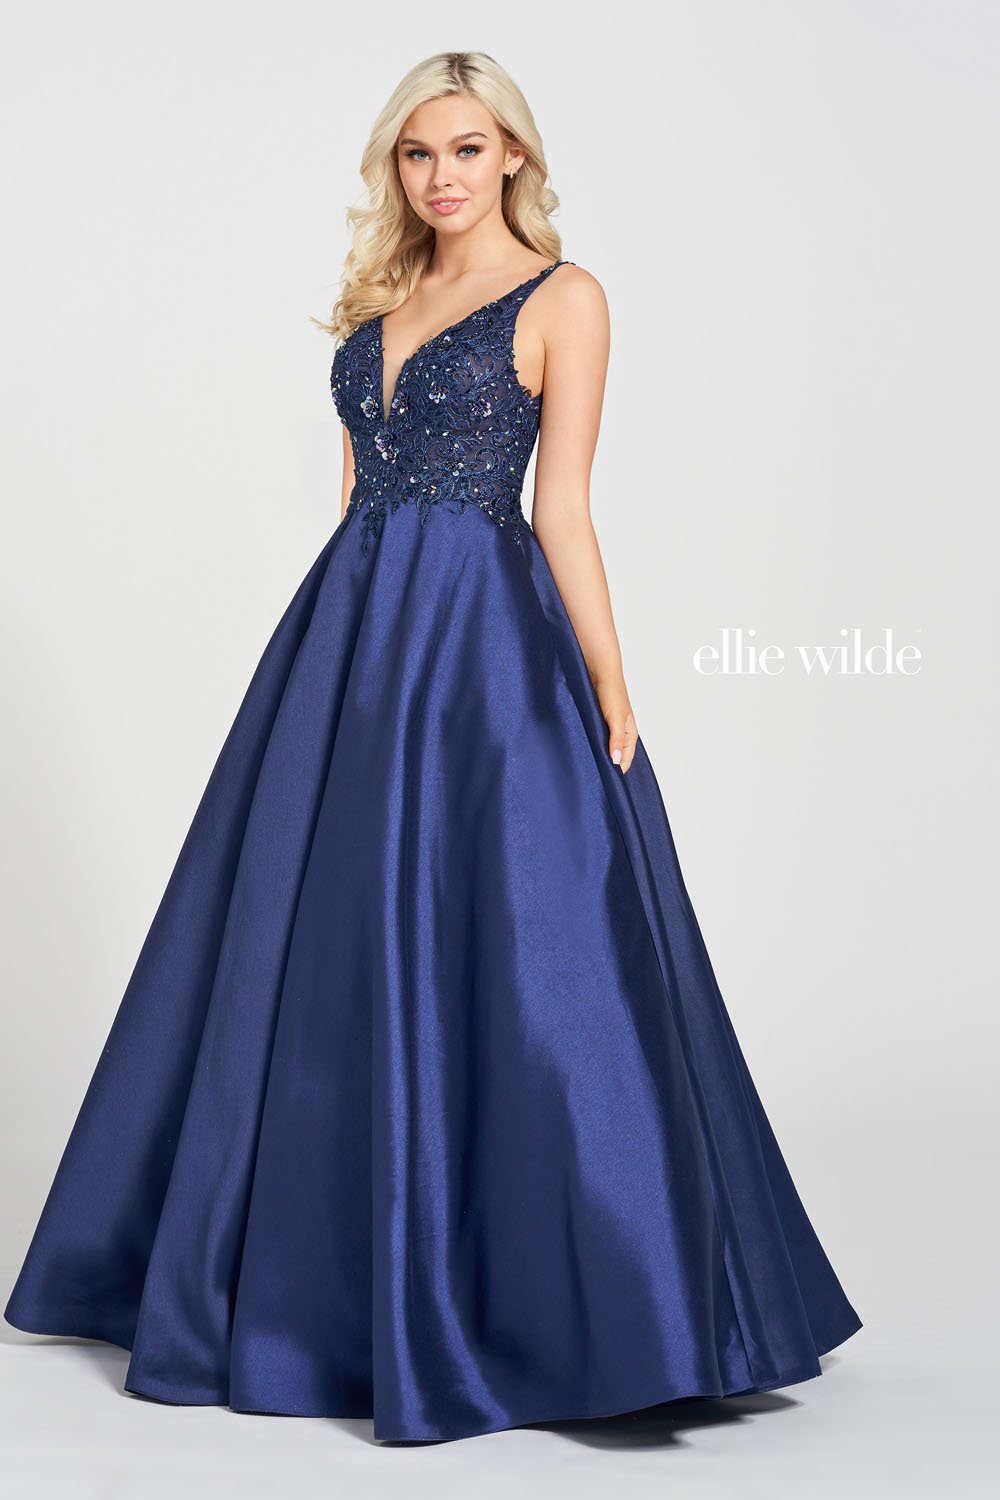 Ellie Wilde Navy Blue EW122104 Prom Dress Image.  Navy Blue formal dress.